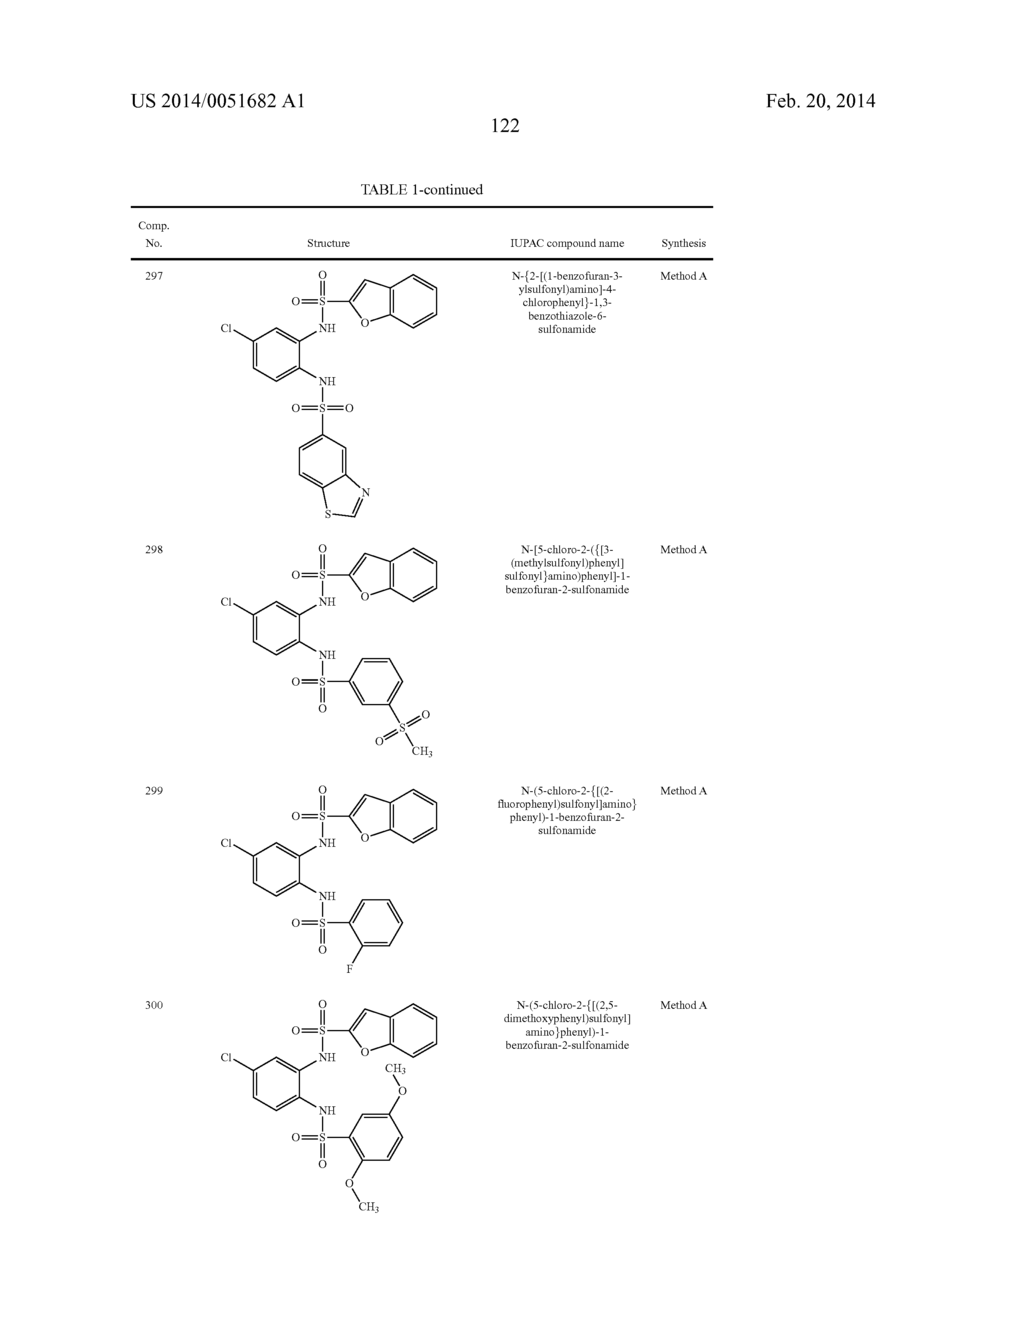 NOVEL 1,2- BIS-SULFONAMIDE DERIVATIVES AS CHEMOKINE RECEPTOR MODULATORS - diagram, schematic, and image 123